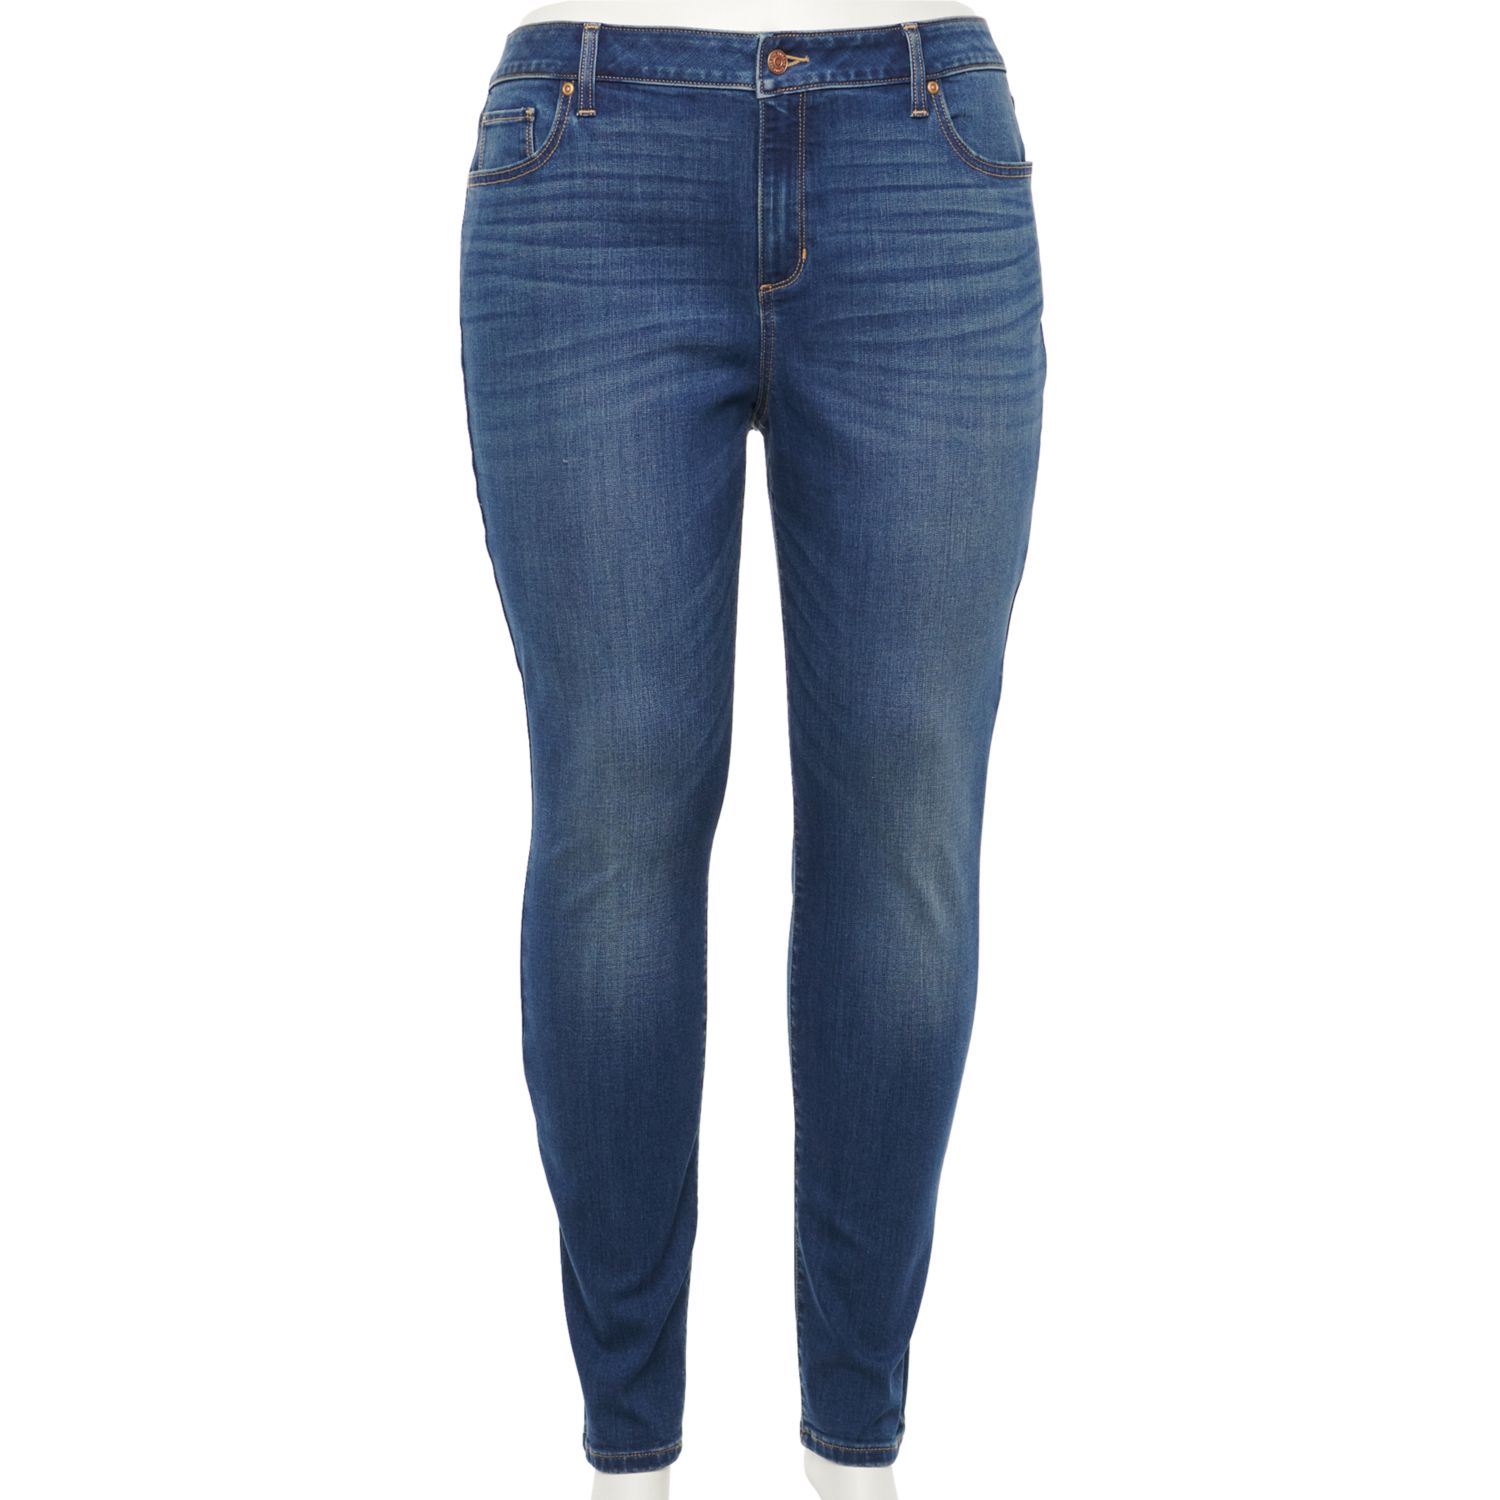 sonoma goods for life skinny jeans